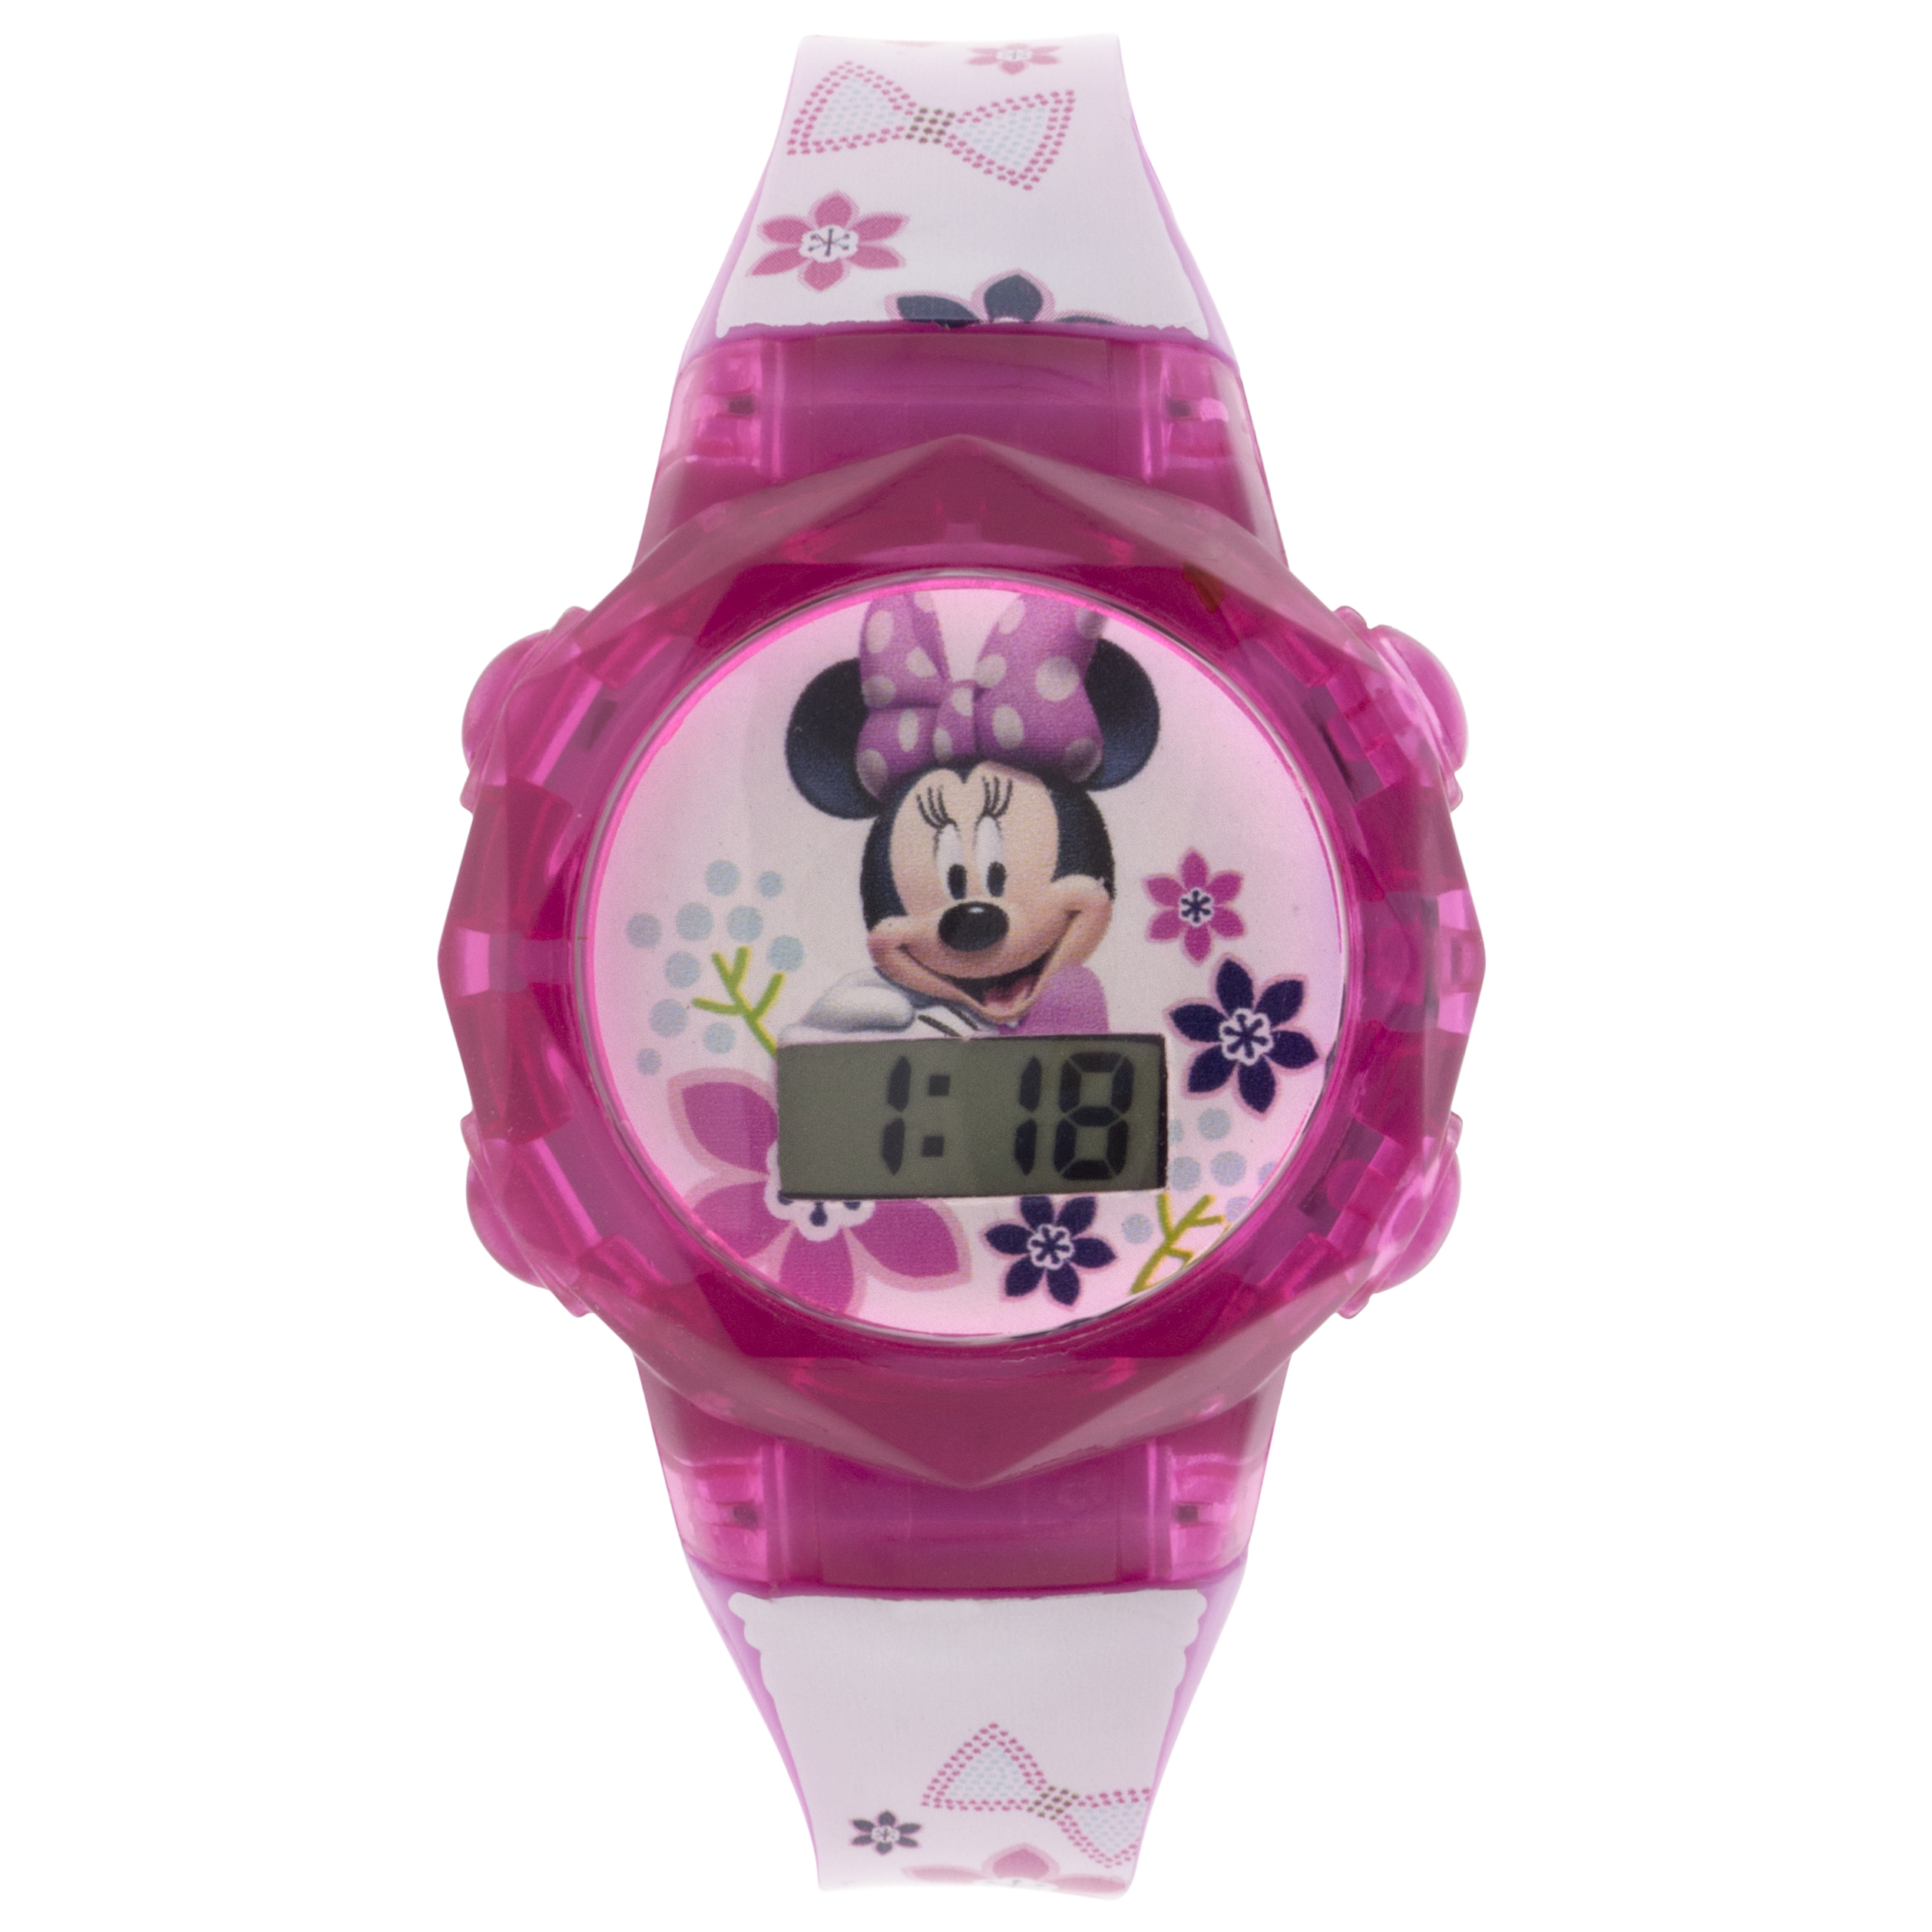 Minnie Mouse Flashing Light Watch